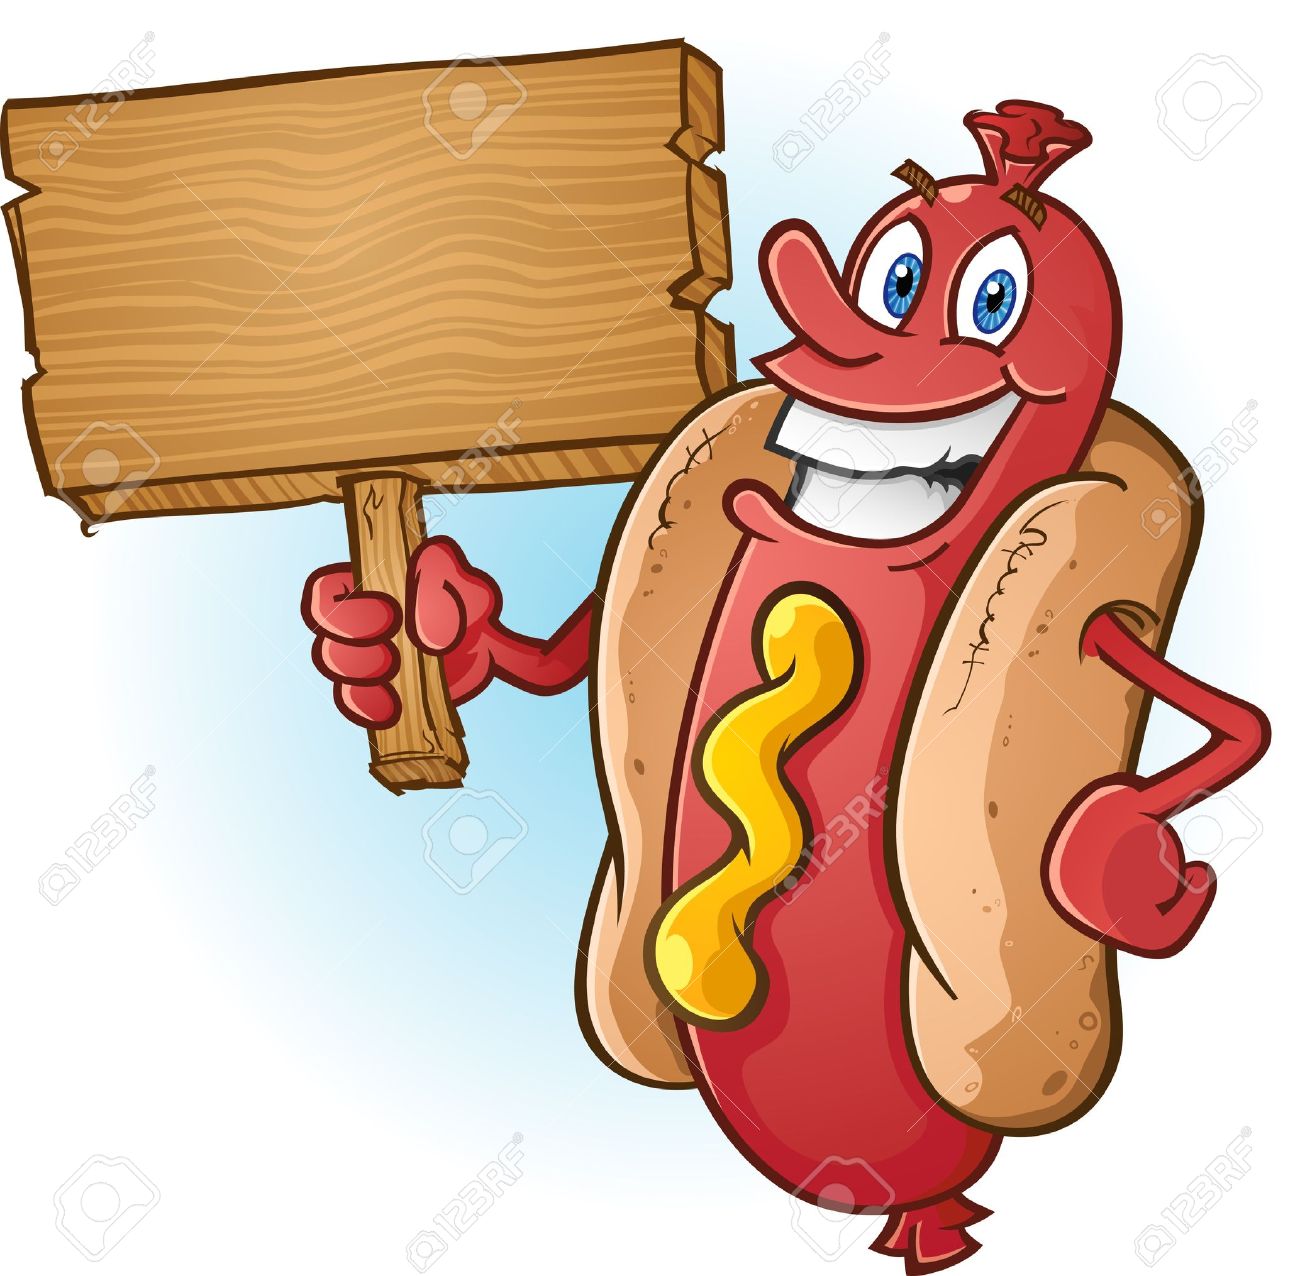 hot dog: Hot Dog Cartoon Holding a Blank Wooden Sign